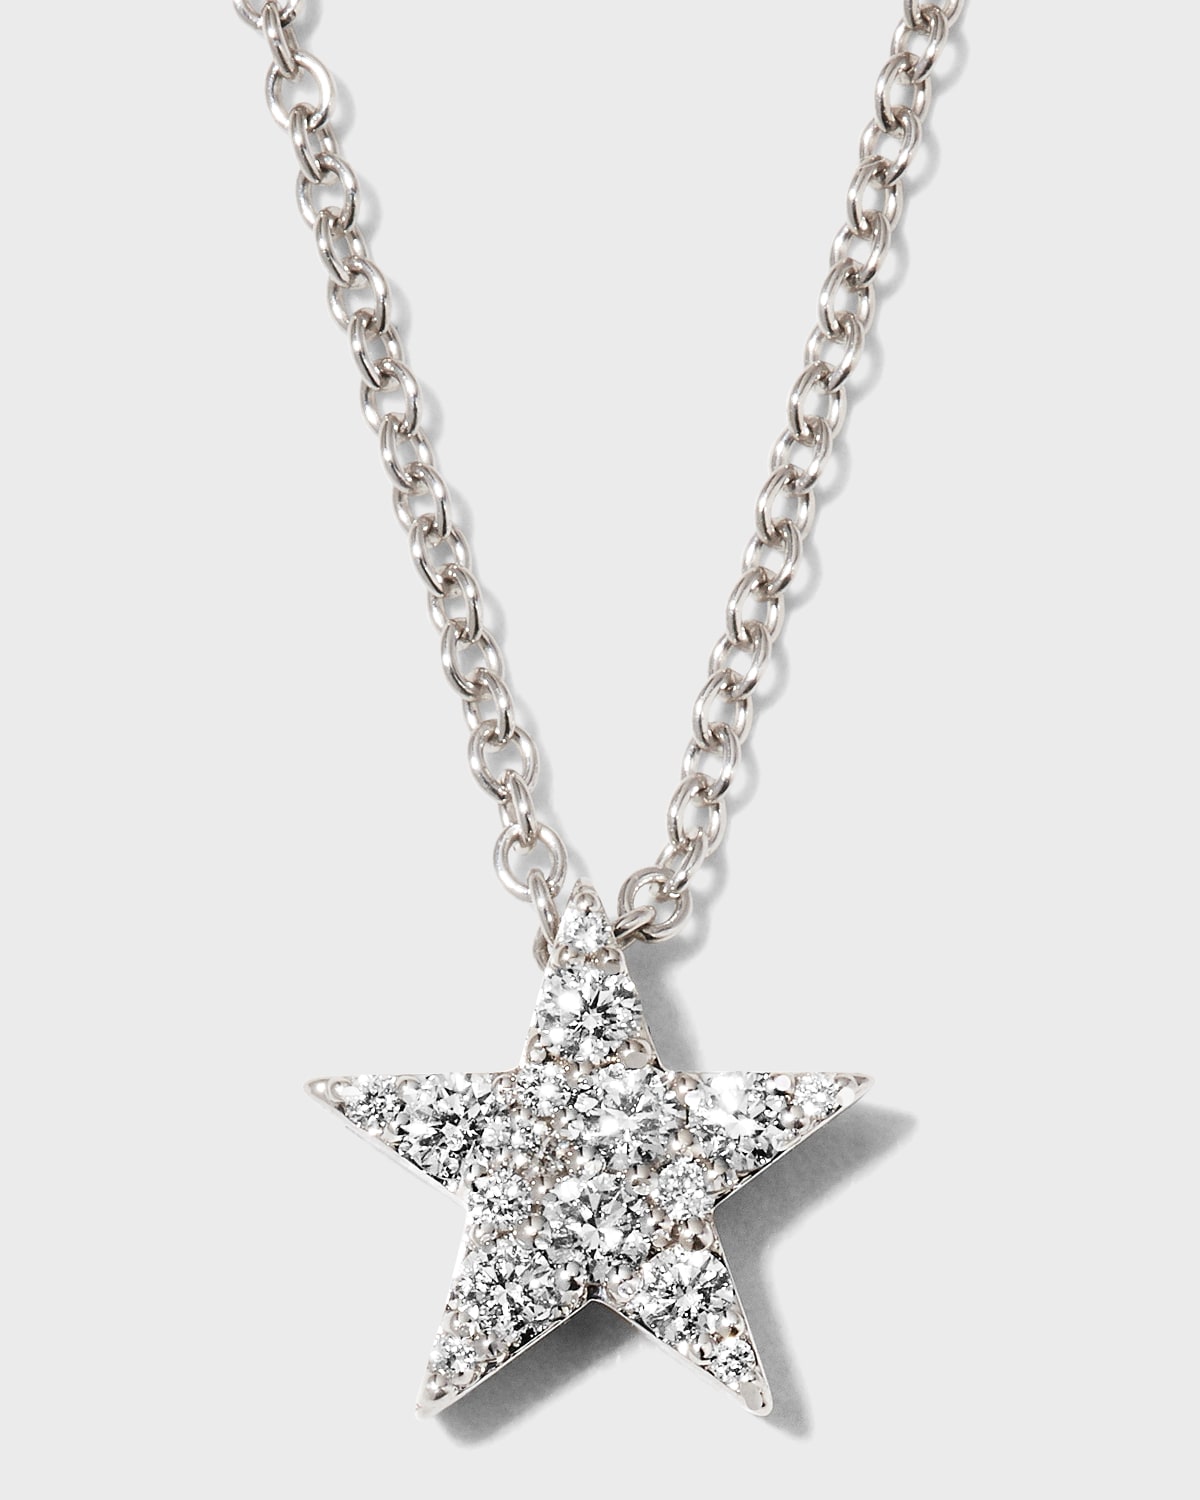 White Gold Luna Pave Star Pendant Necklace, 18"L